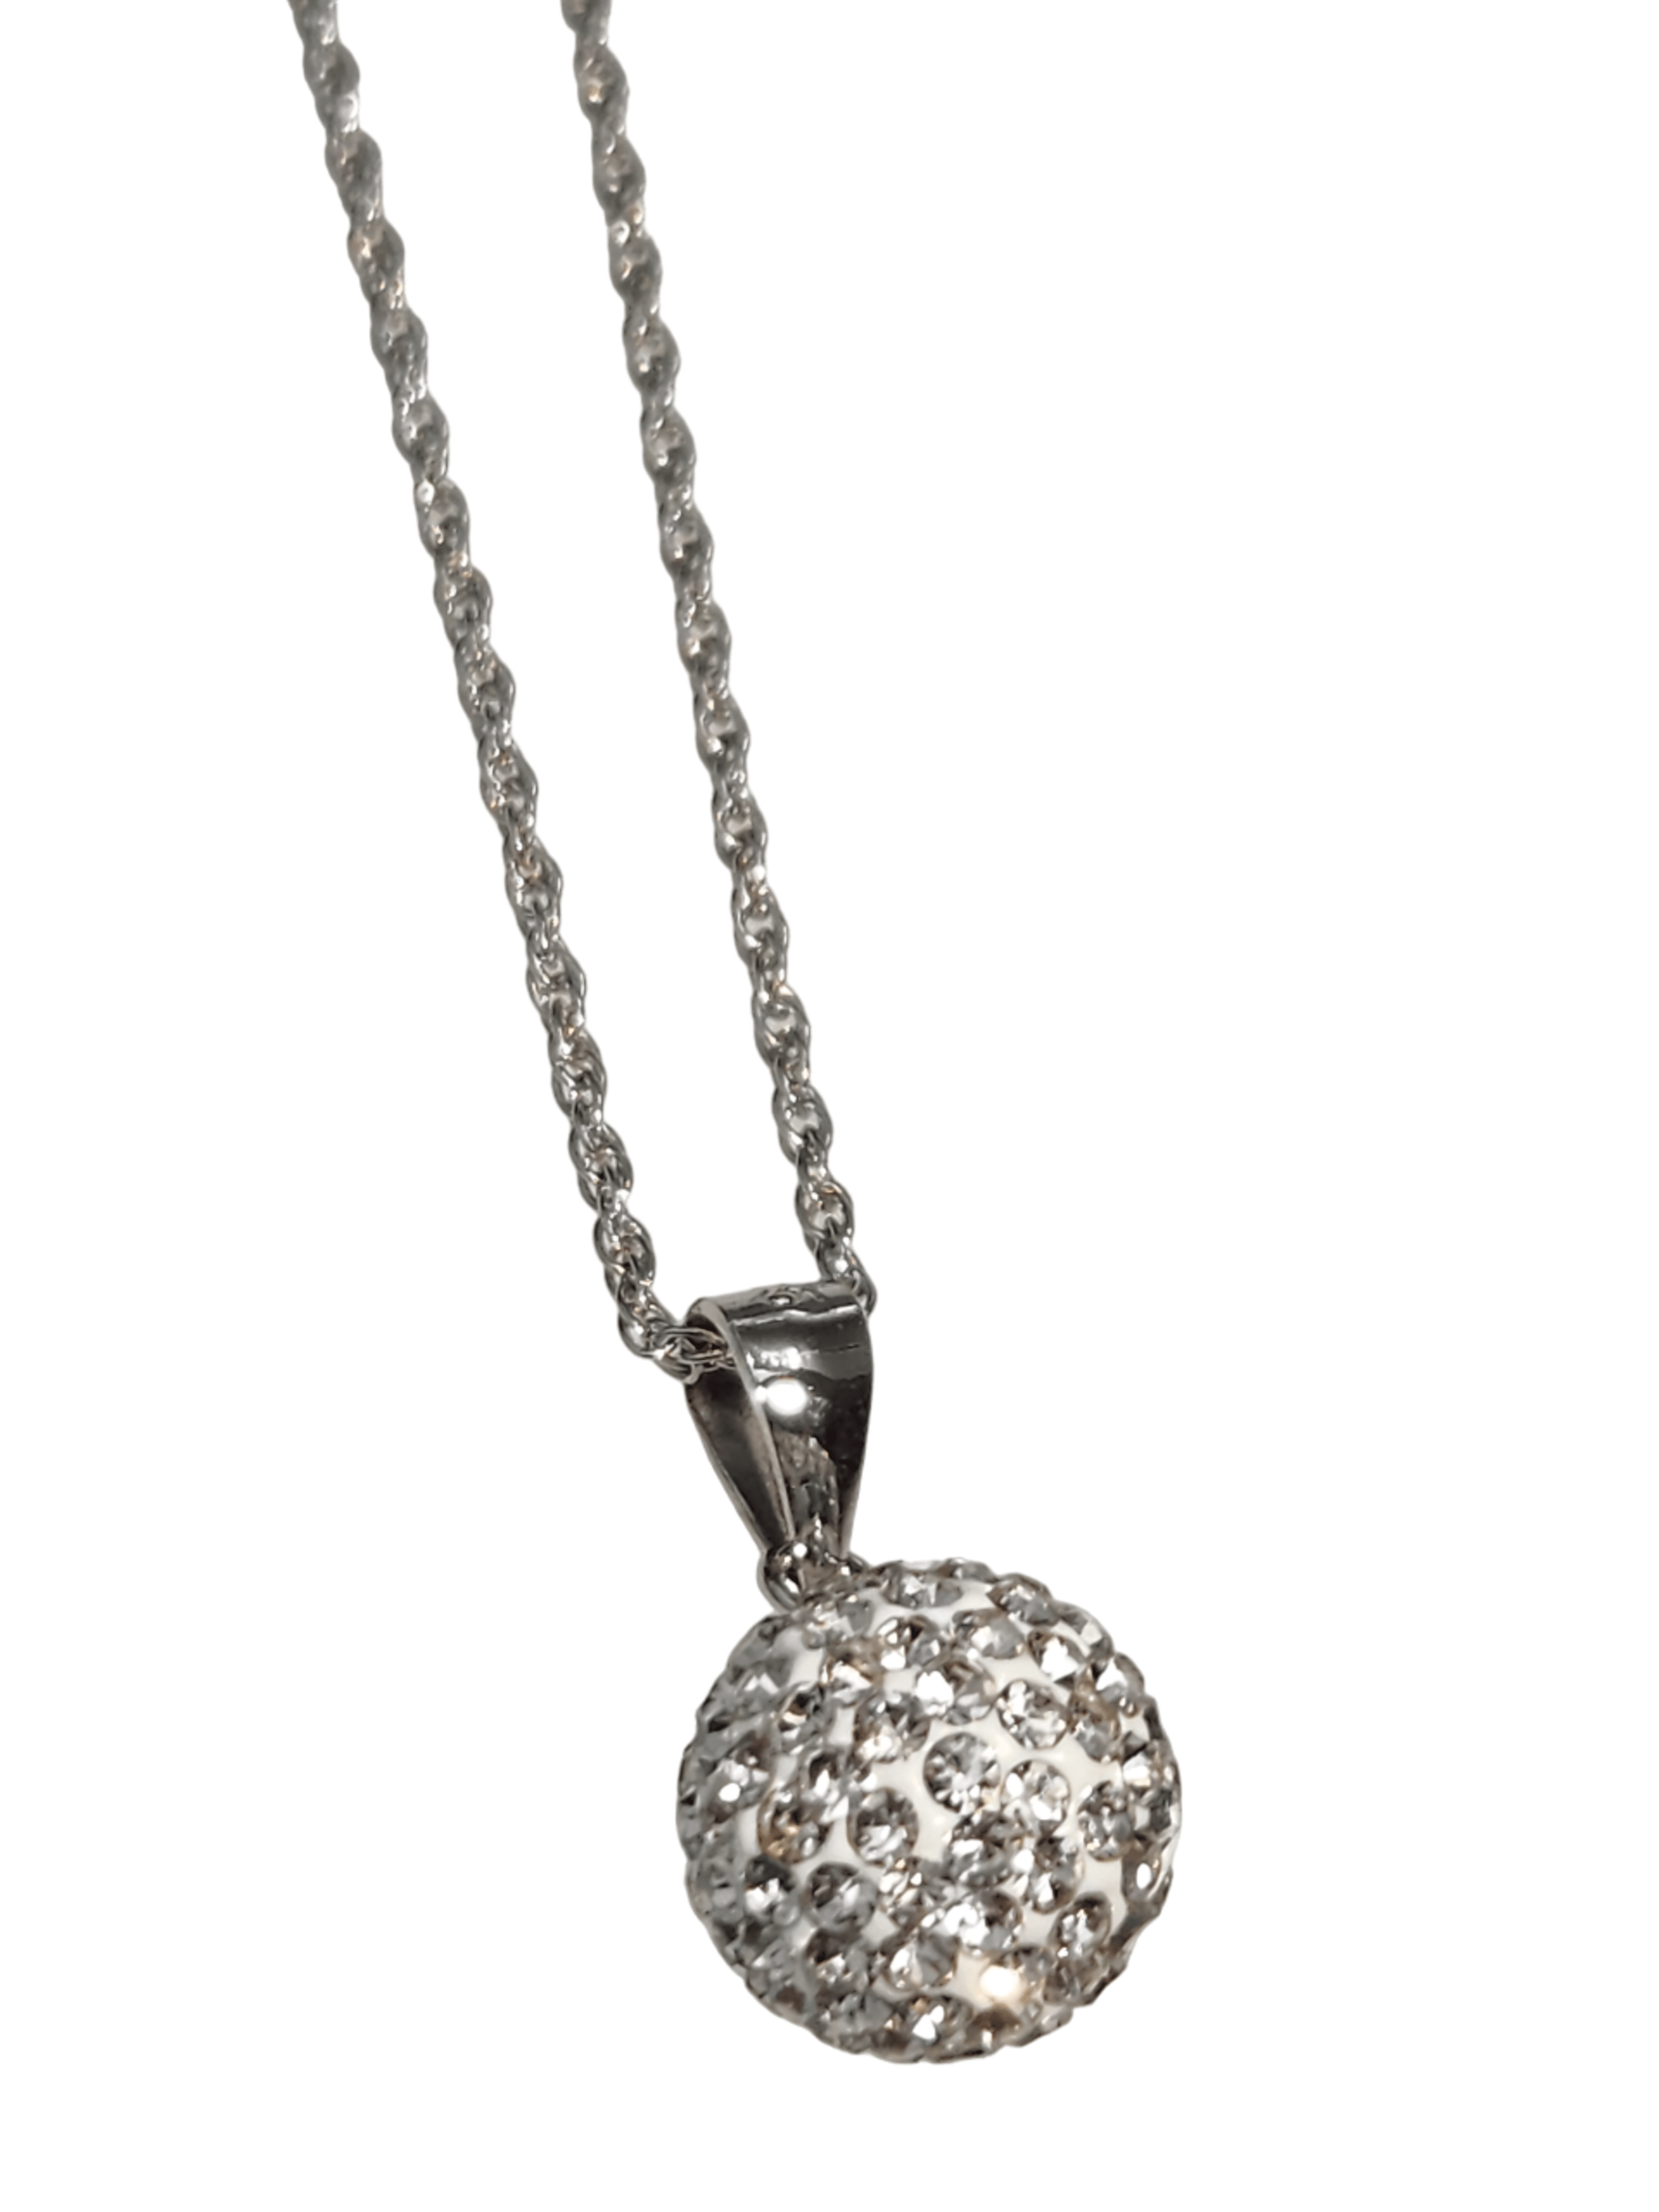 Shop Tiffany HardWear Sterling Silver Ball Pendant | Tiffany & Co.